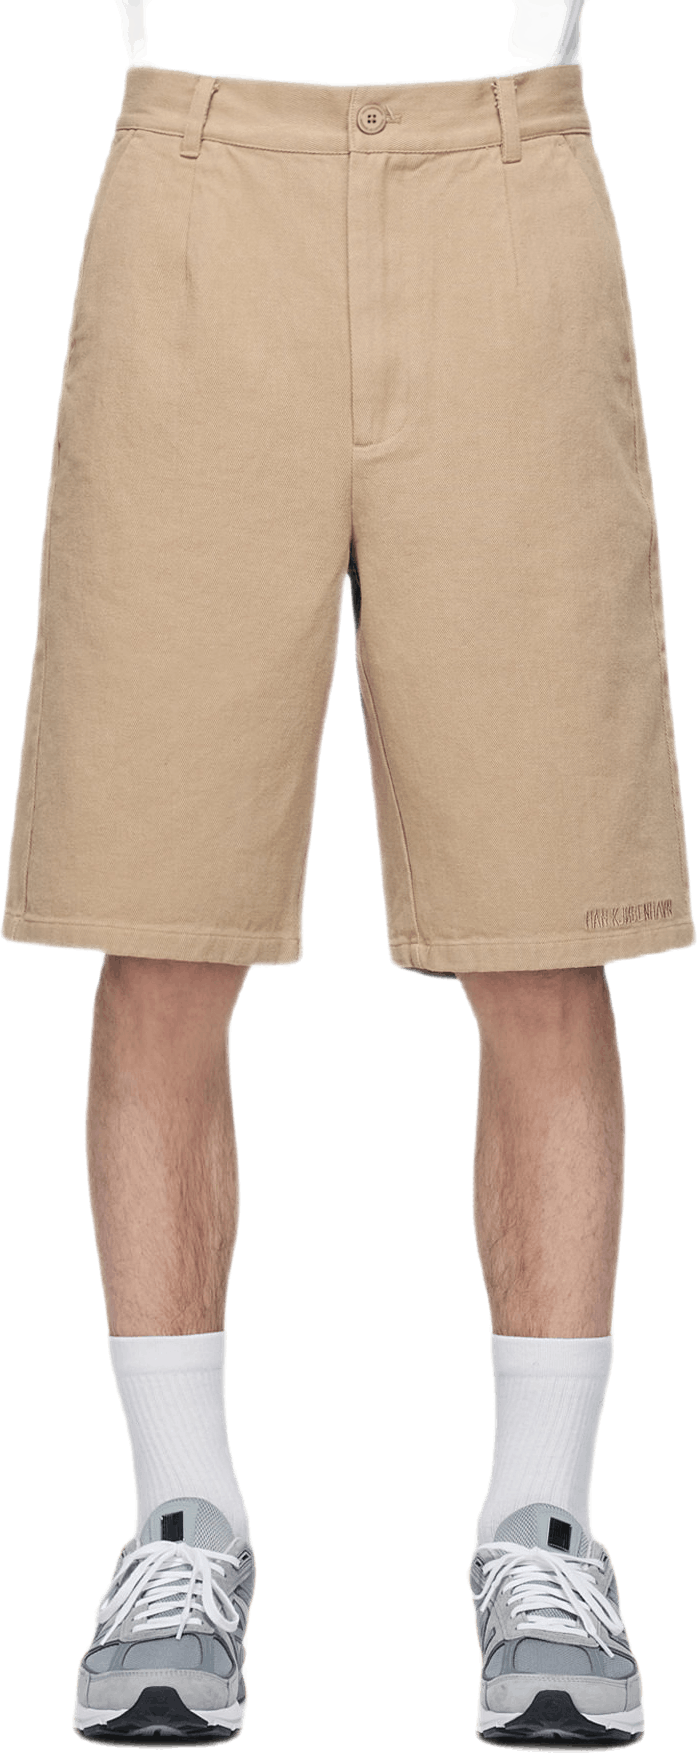 Wide Shorts Khaki